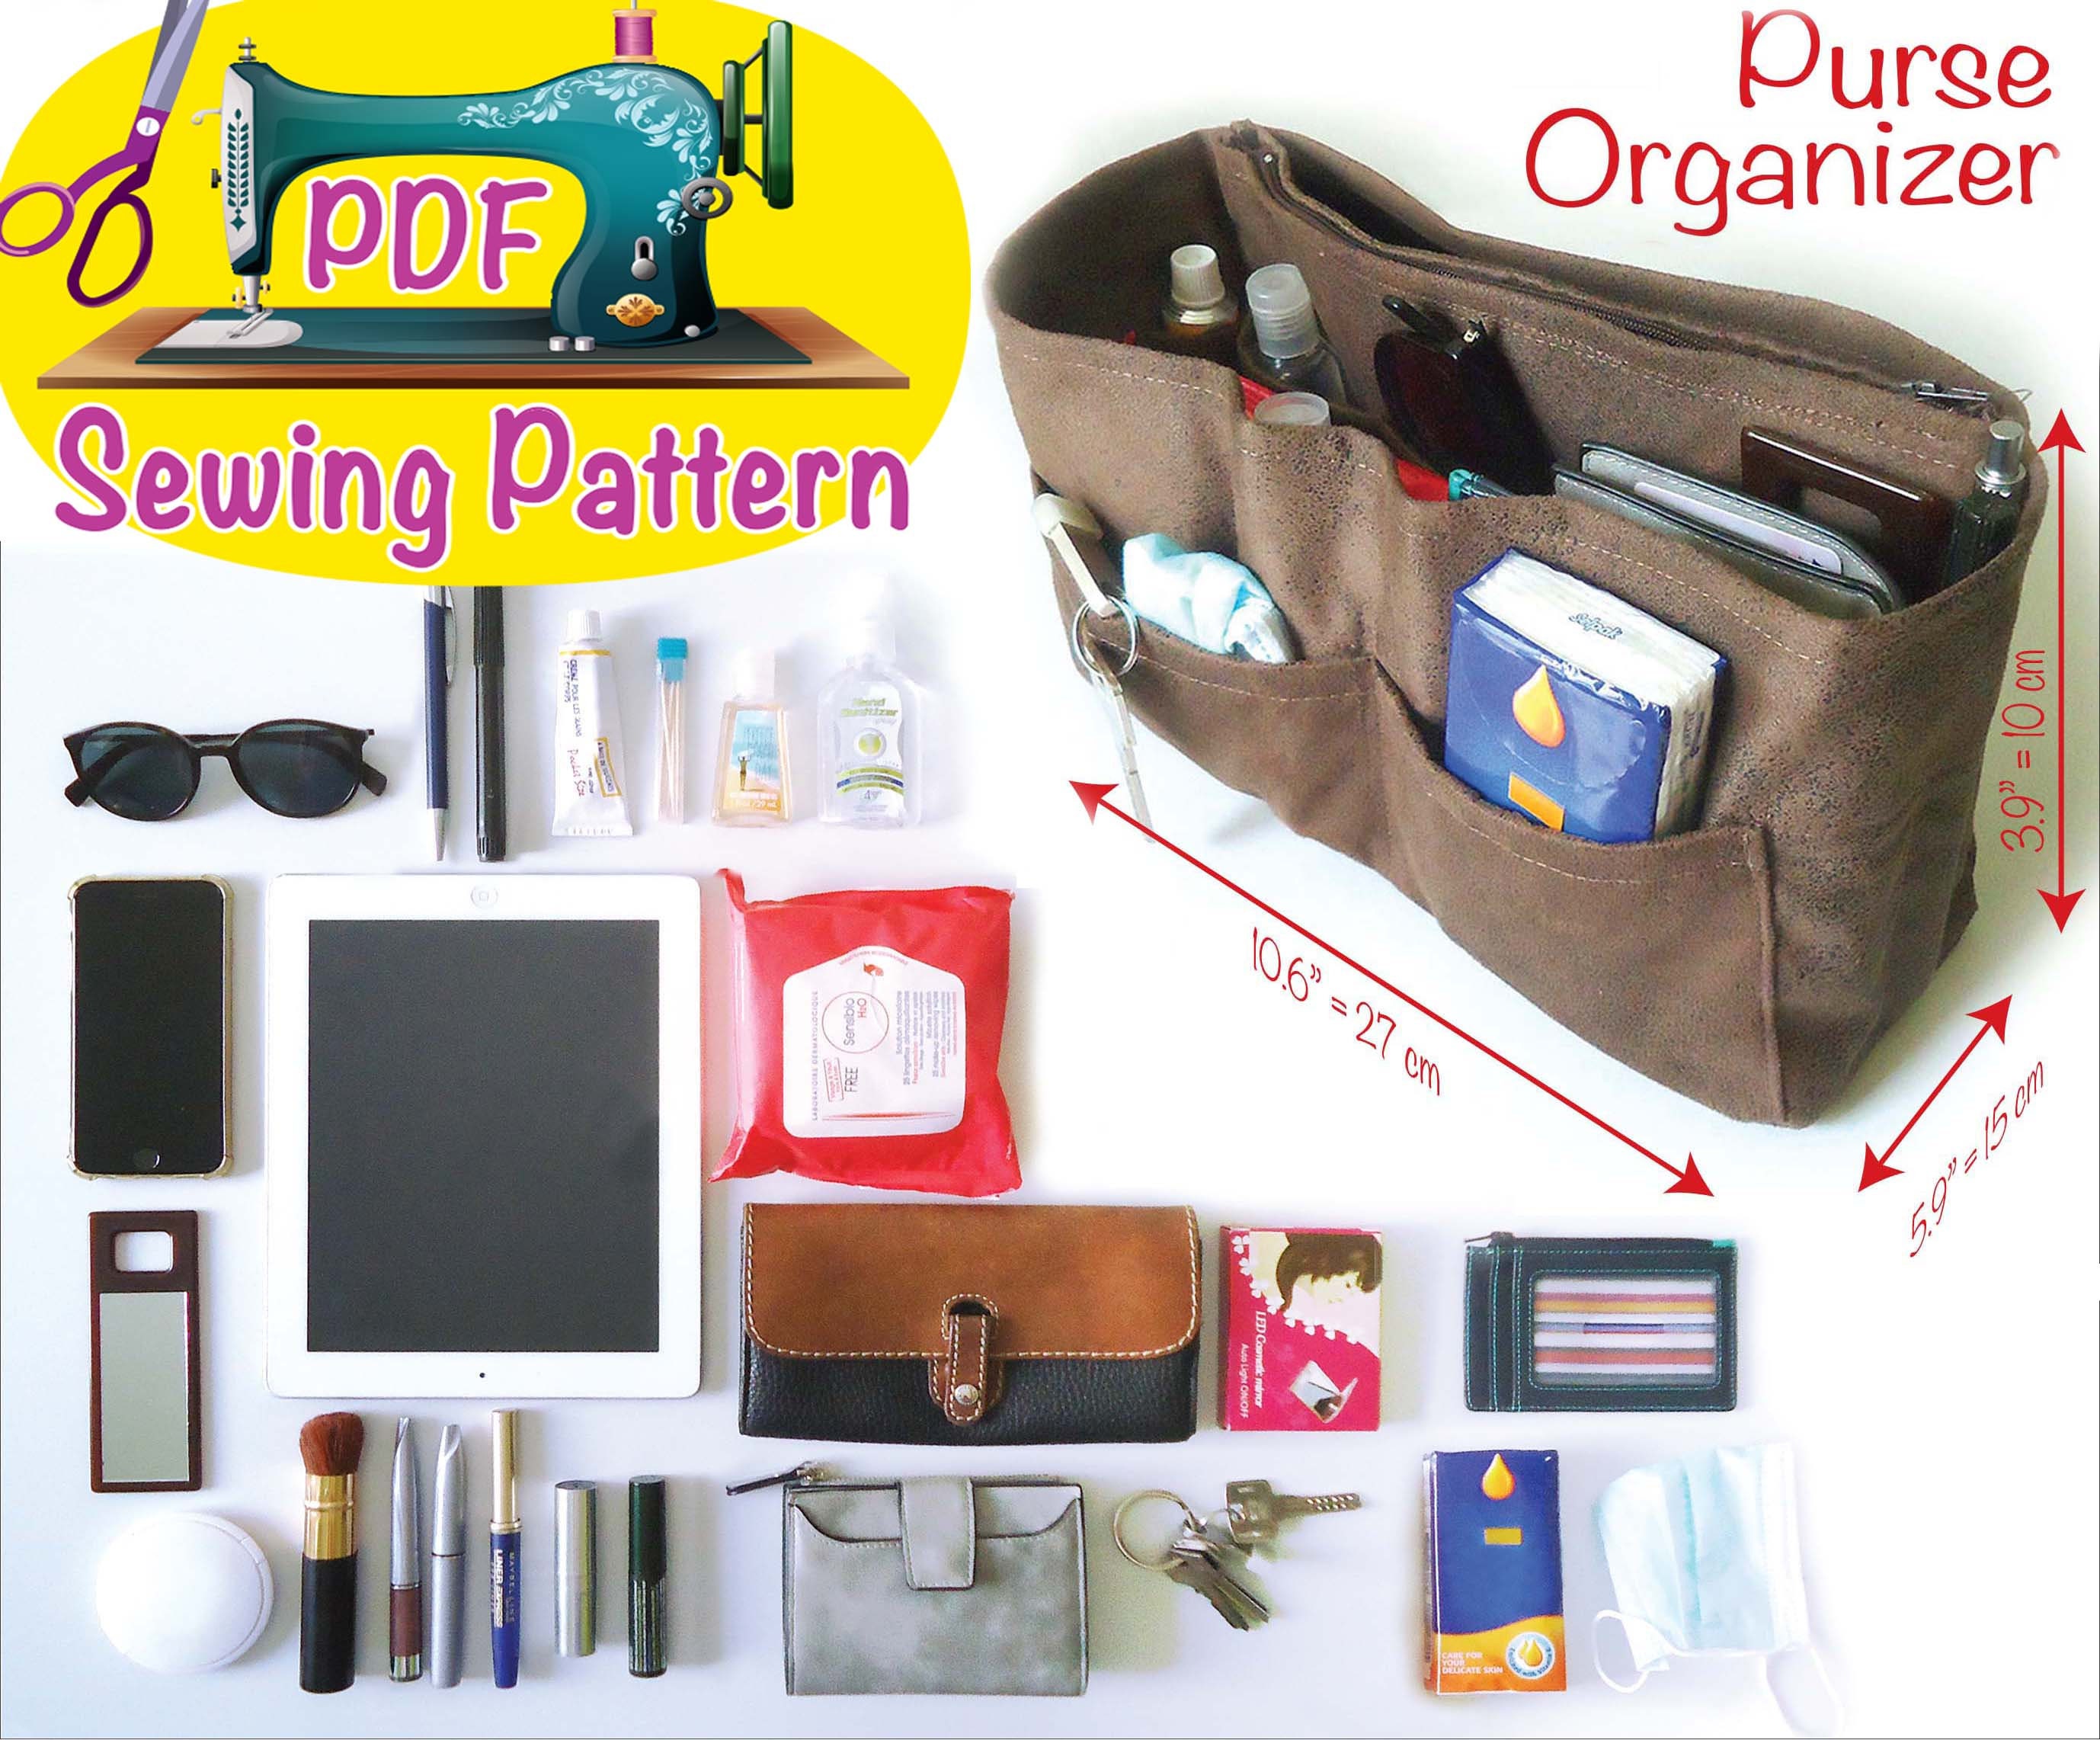 Organizer,Bag Organizer,Insert purse organizer with 2 packs in one